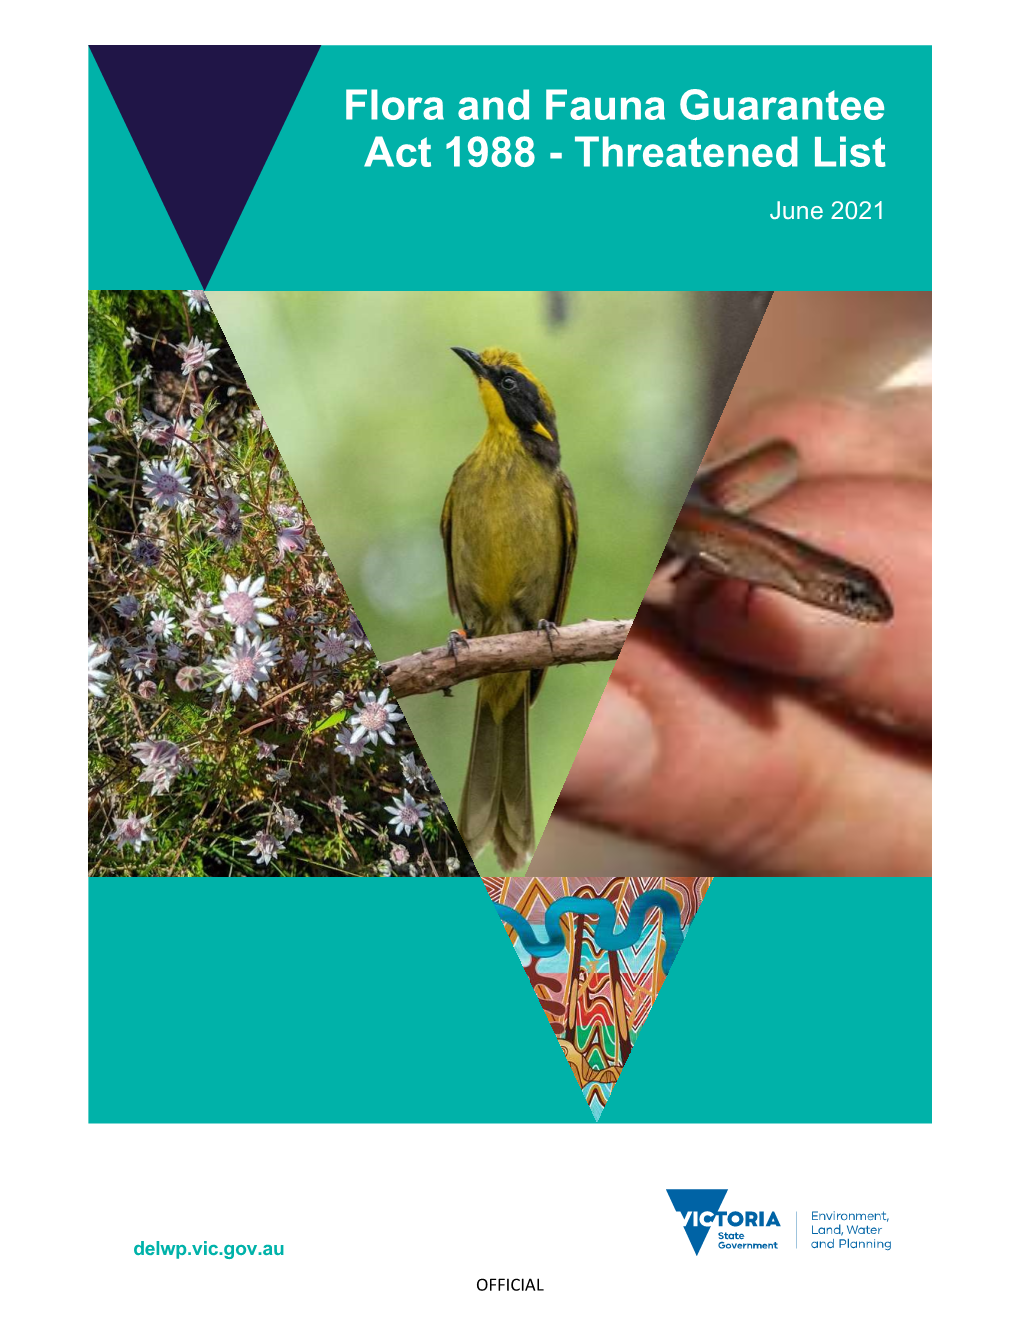 Flora and Fauna Guarantee Act 1988 - Threatened List